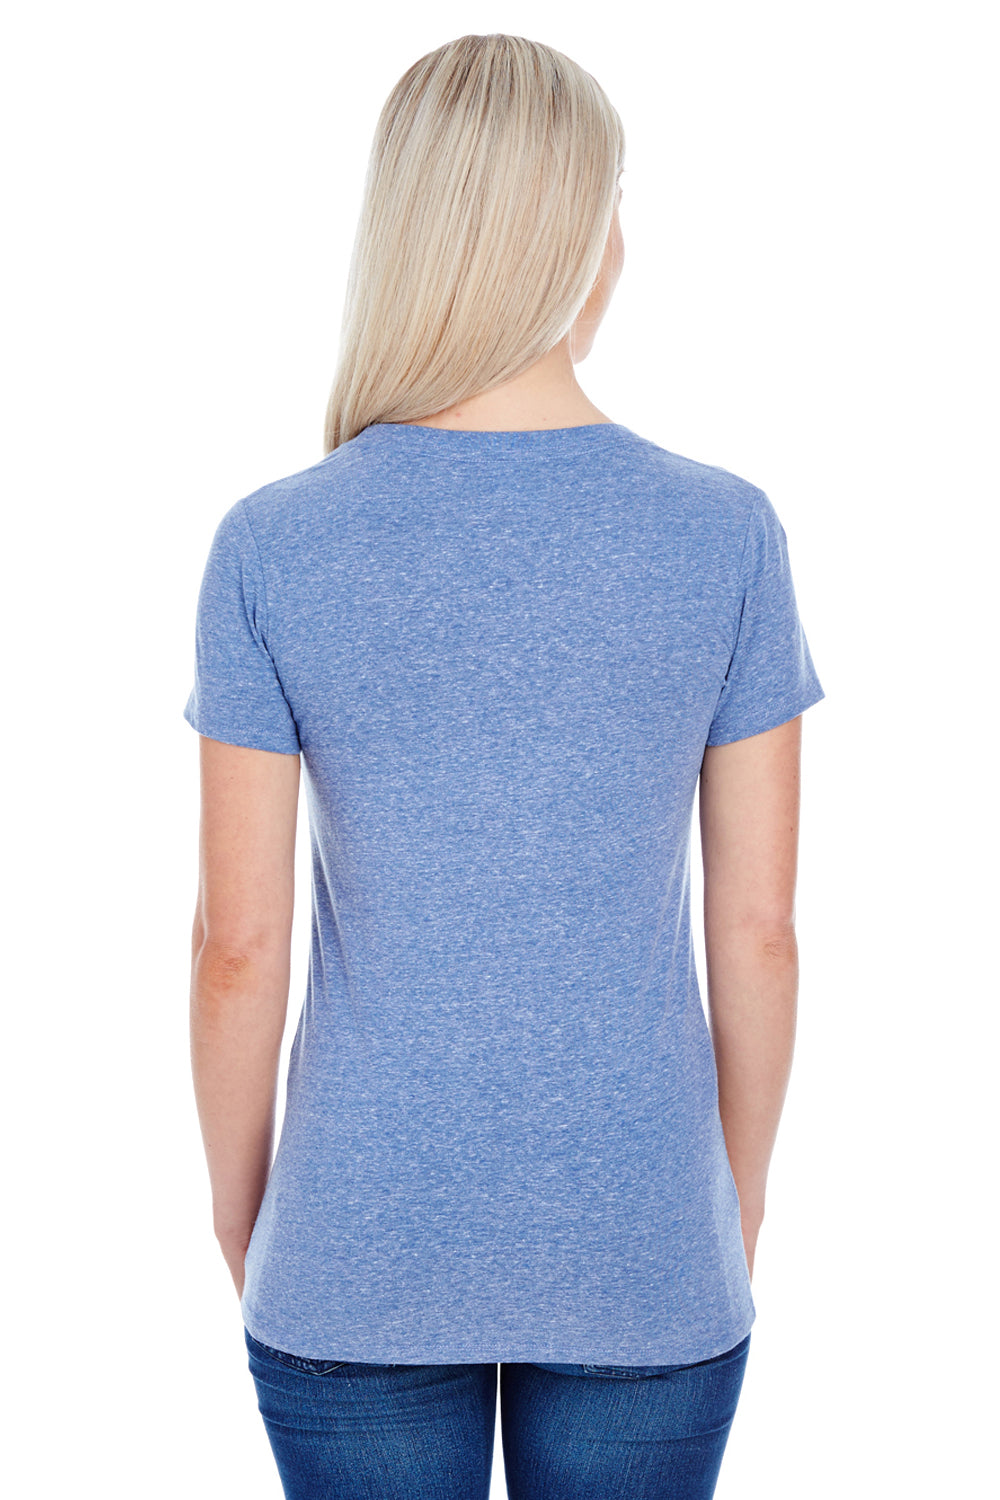 Threadfast Apparel 202A Womens Short Sleeve Crewneck T-Shirt Navy Blue Back